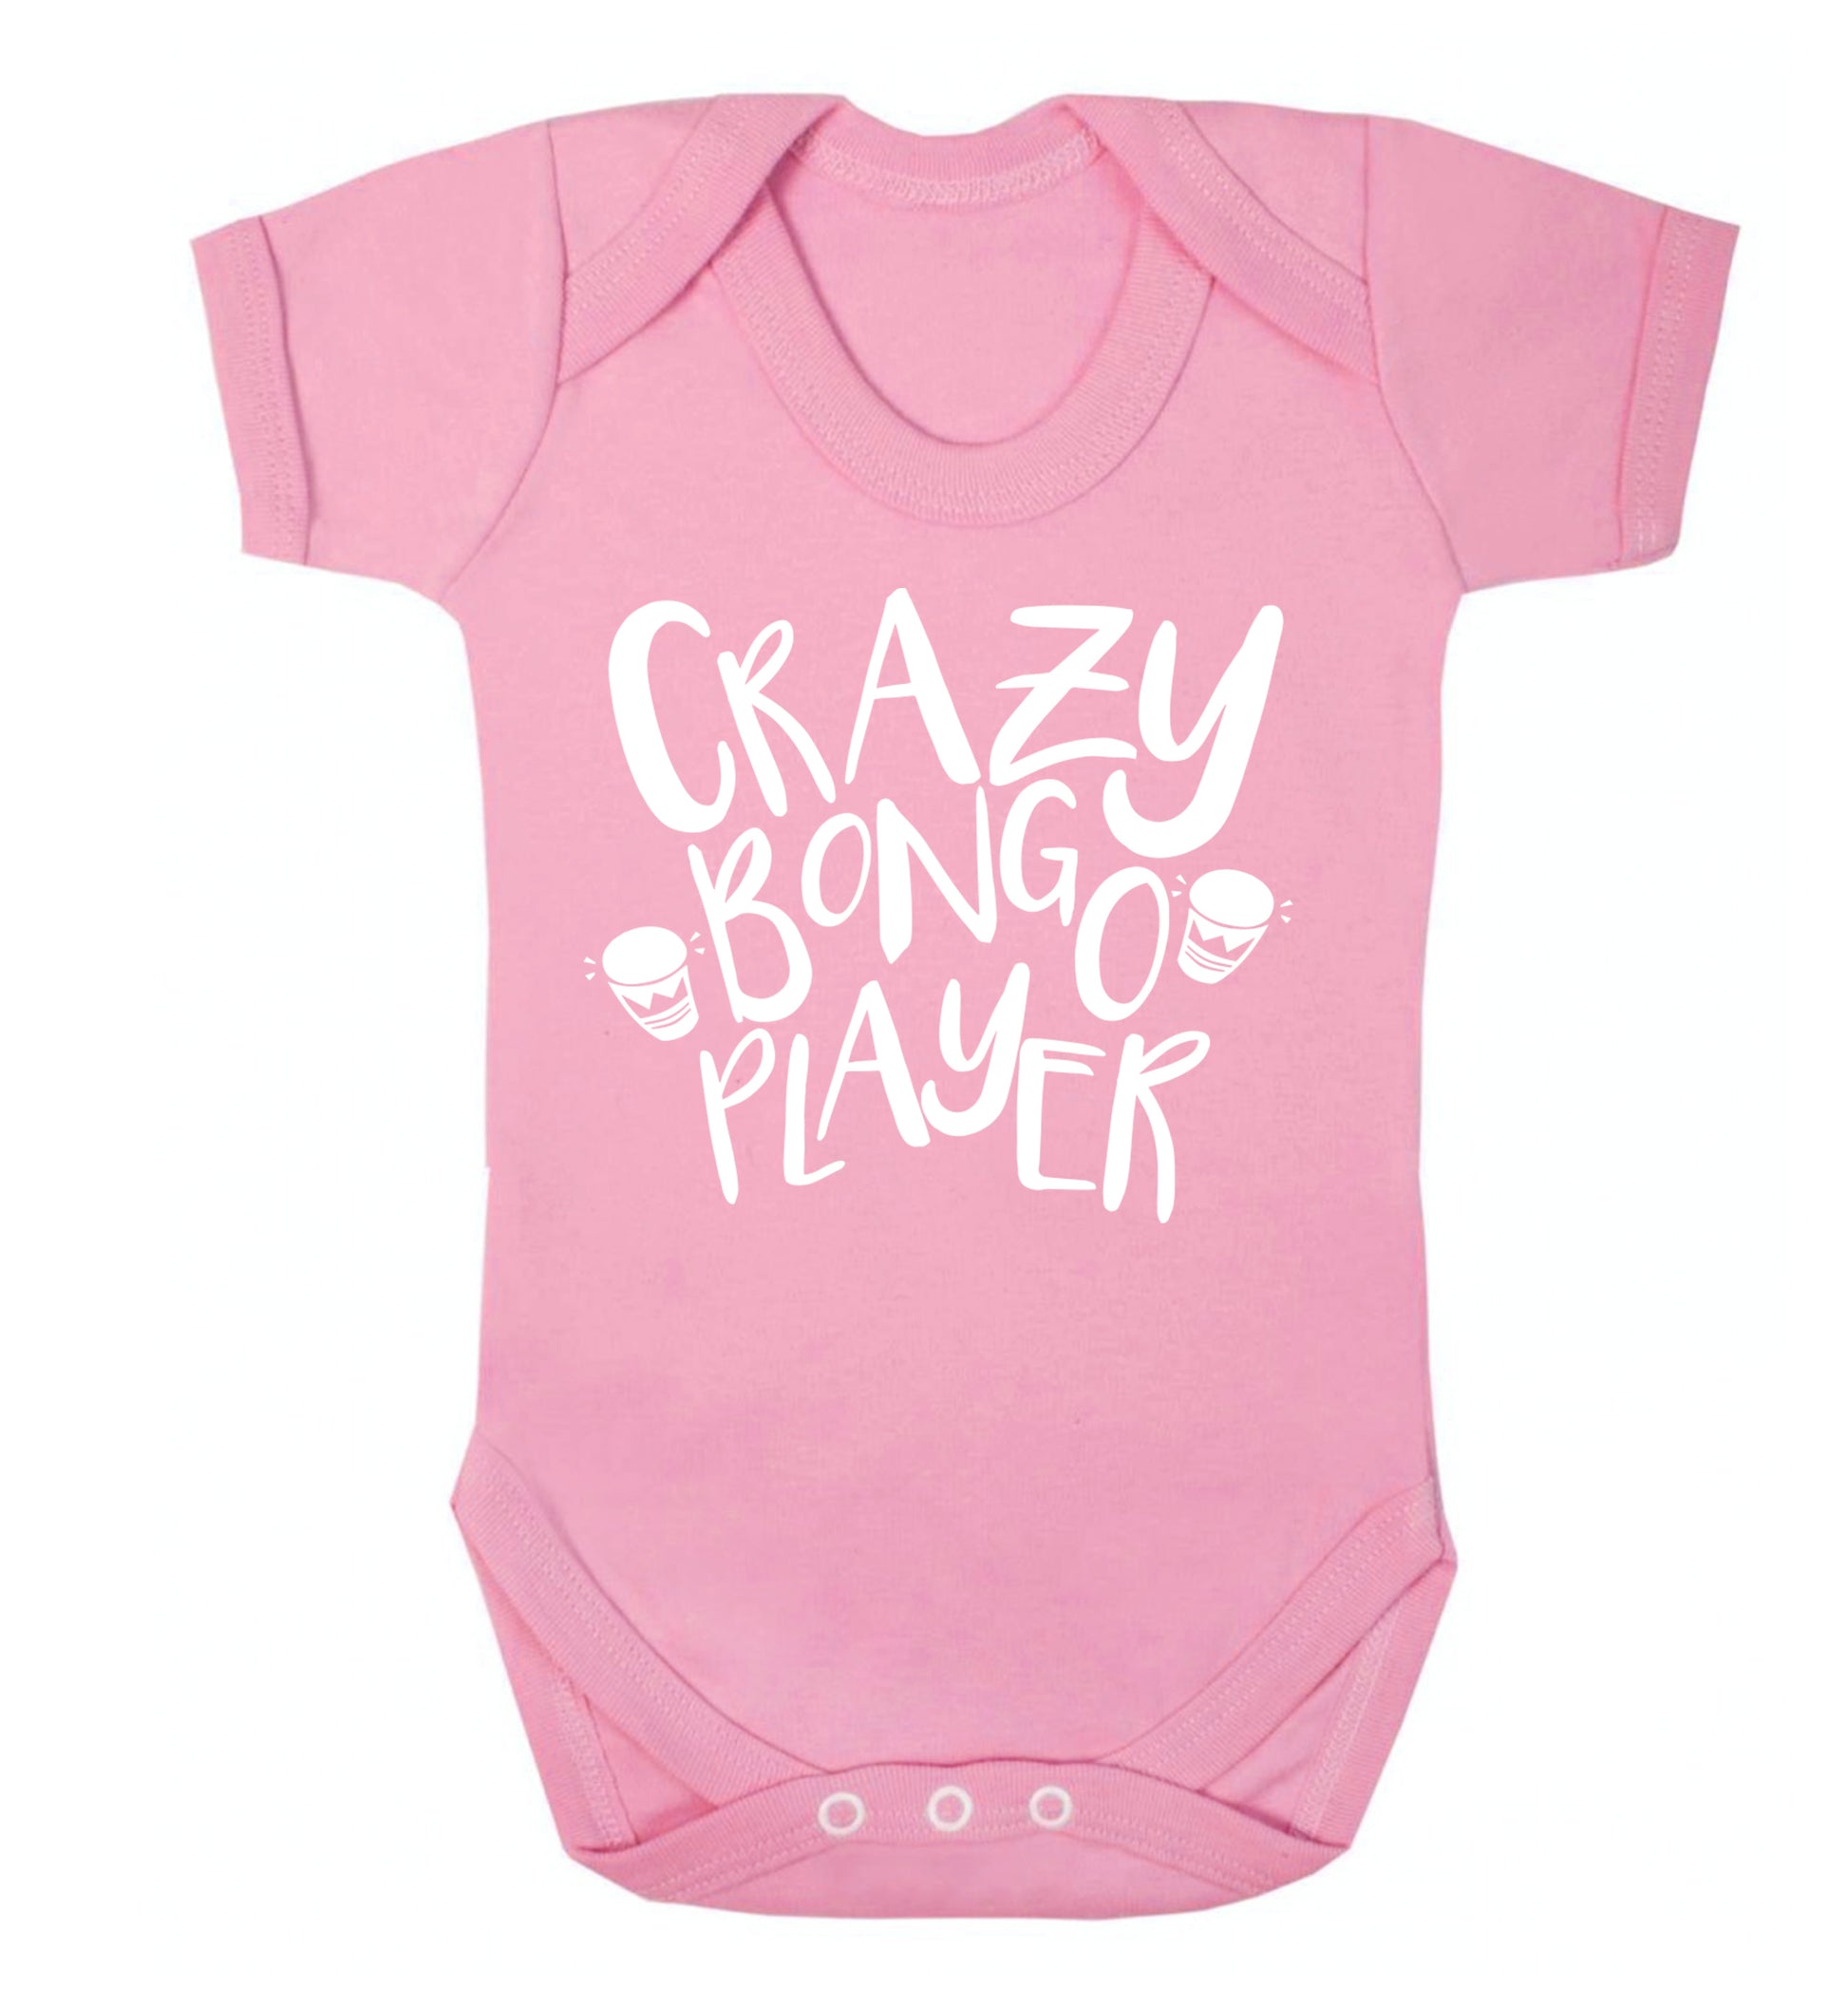 Crazy bongo player Baby Vest pale pink 18-24 months